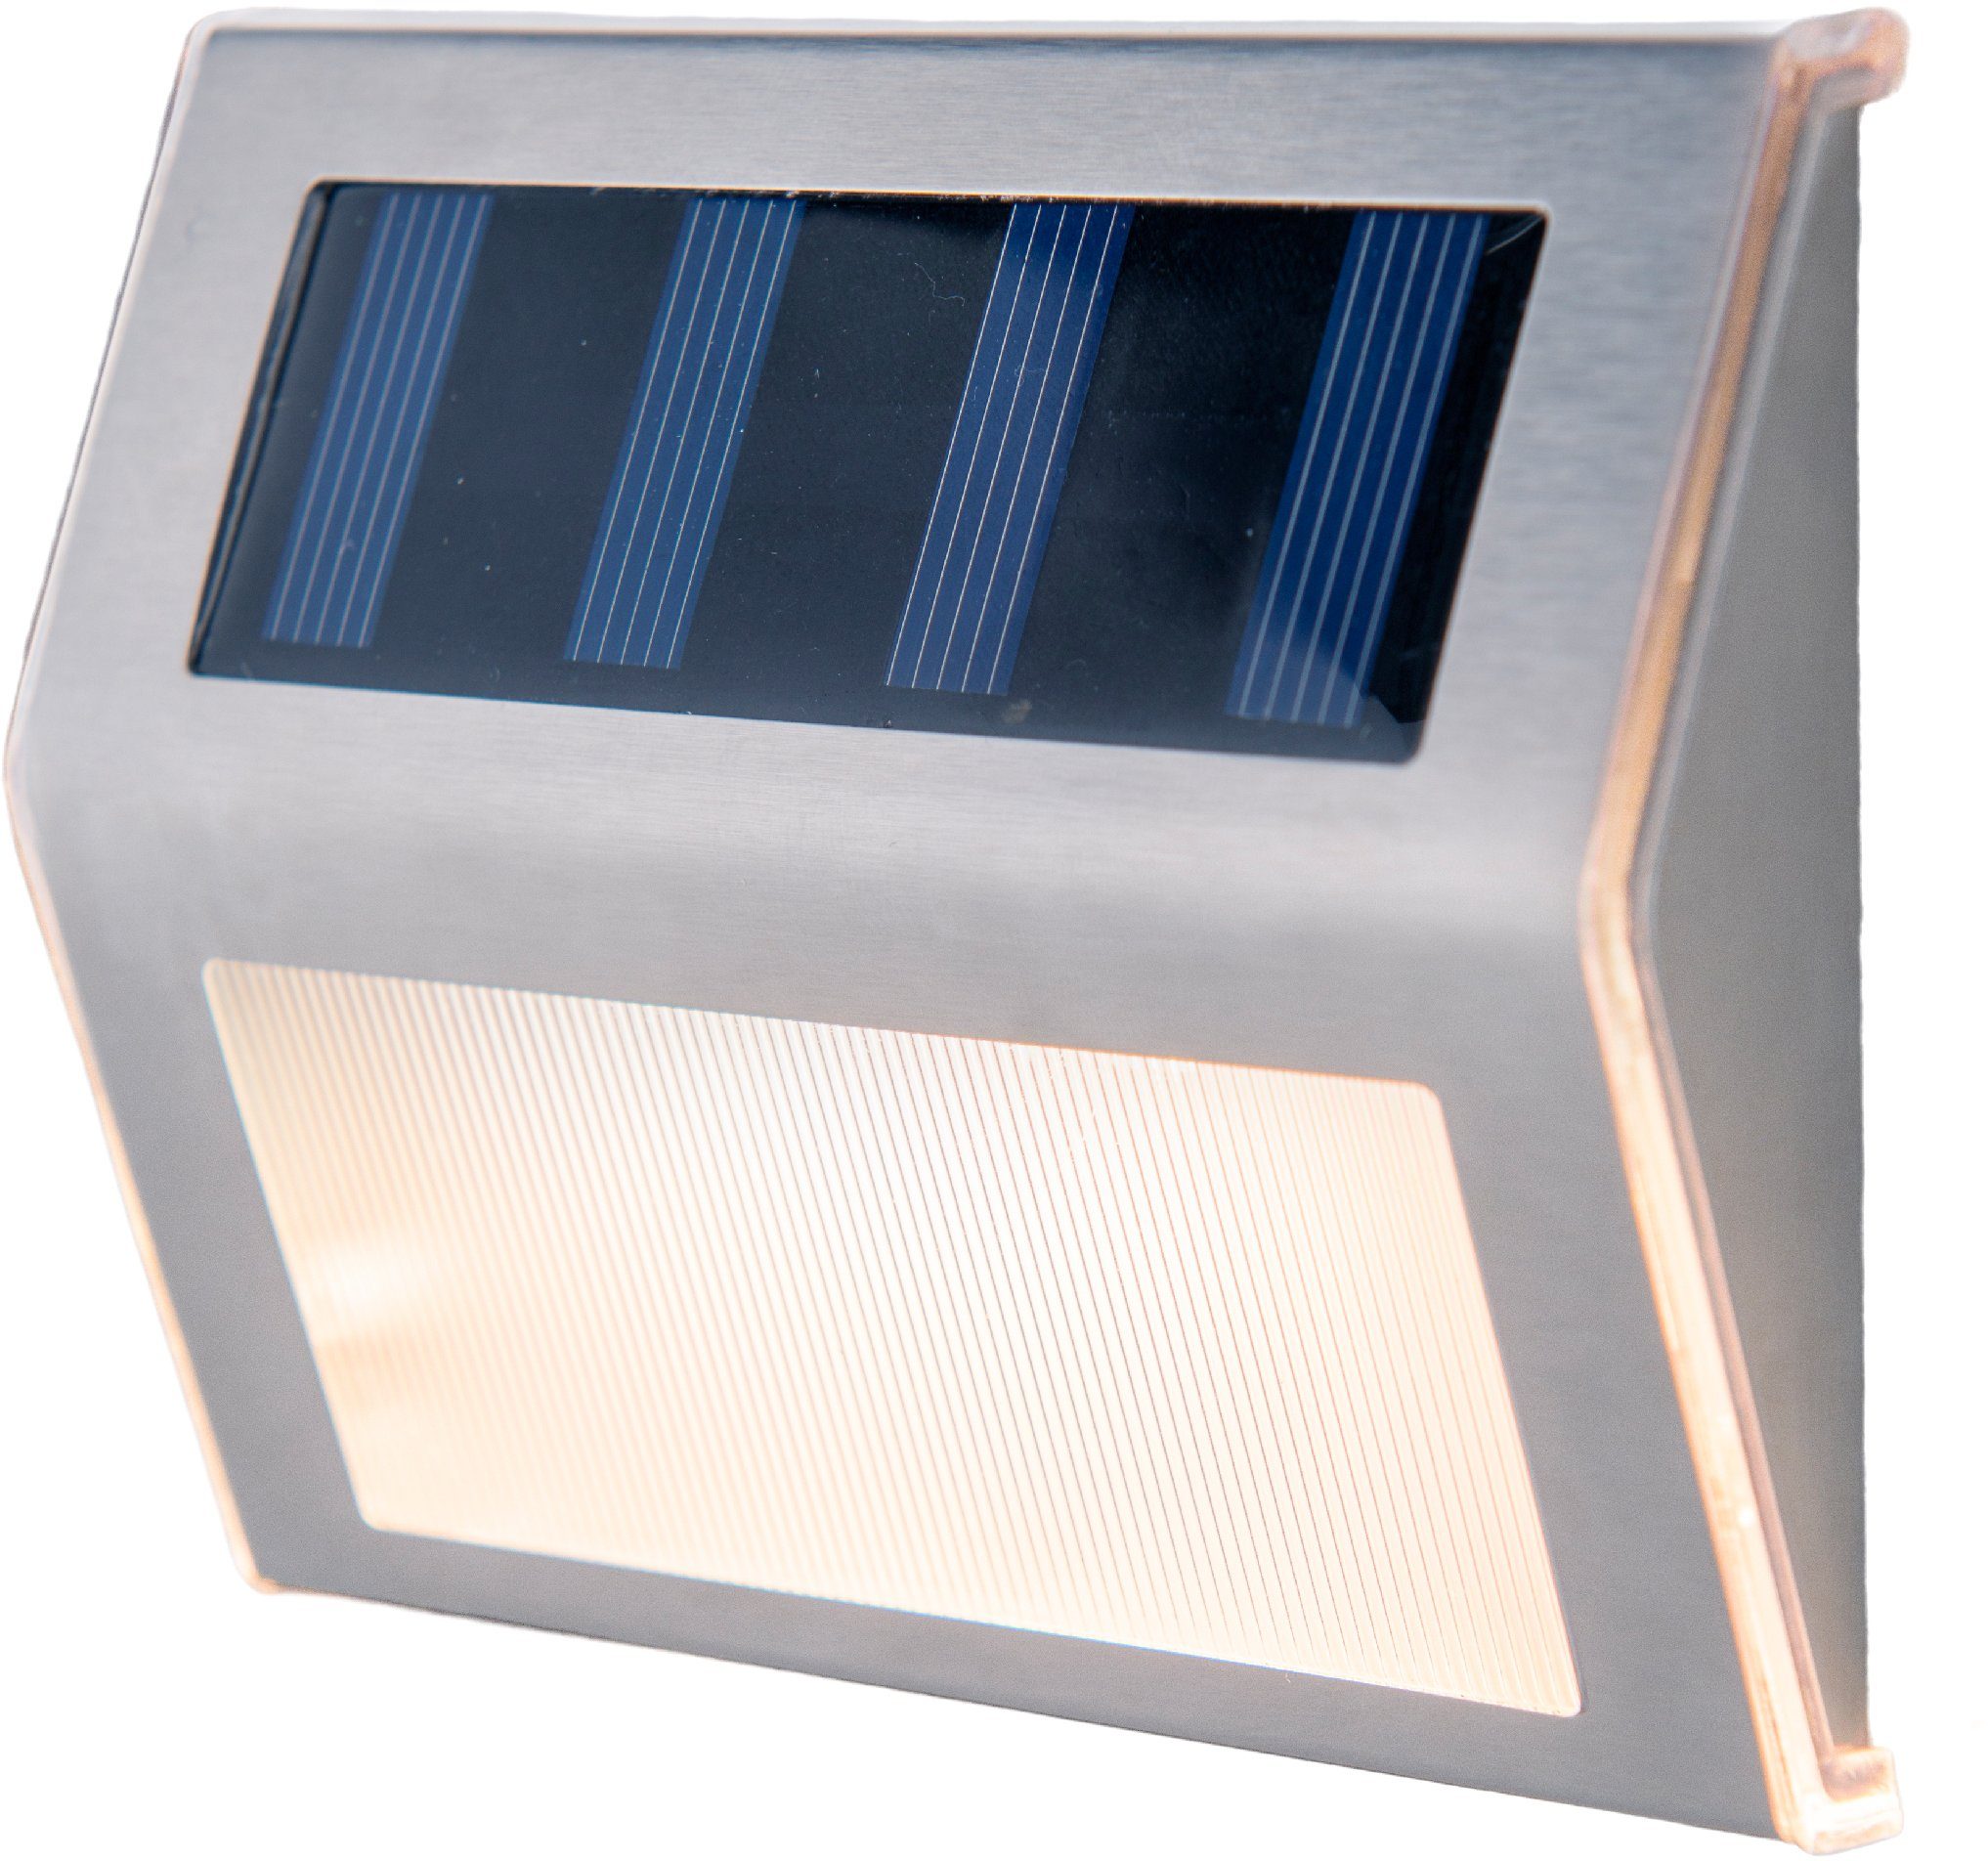 LED 0,06W, 4er integriert, Solarleuchten,incl. Warmweiß, Lights, metall-blank, Outoor LED / 5x LED´s fest näve warmweiß LED Solarleuchte